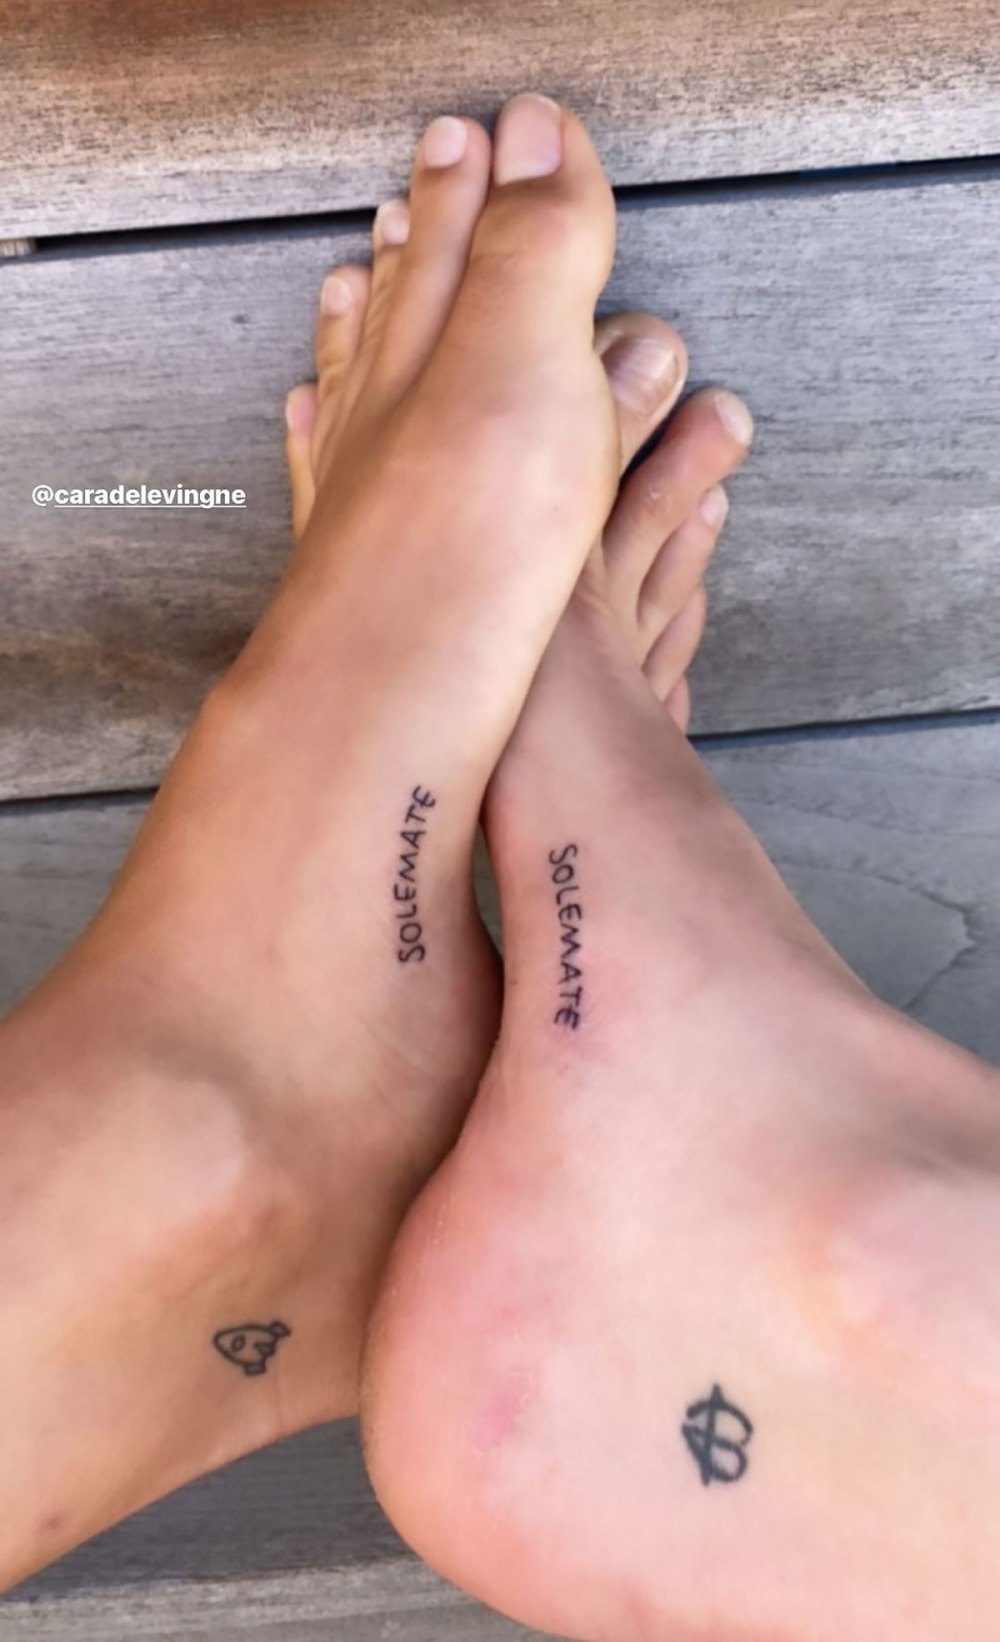 Kaia Gerber Cara Delevingne’s Matching ‘Soulmate’ Tattoos